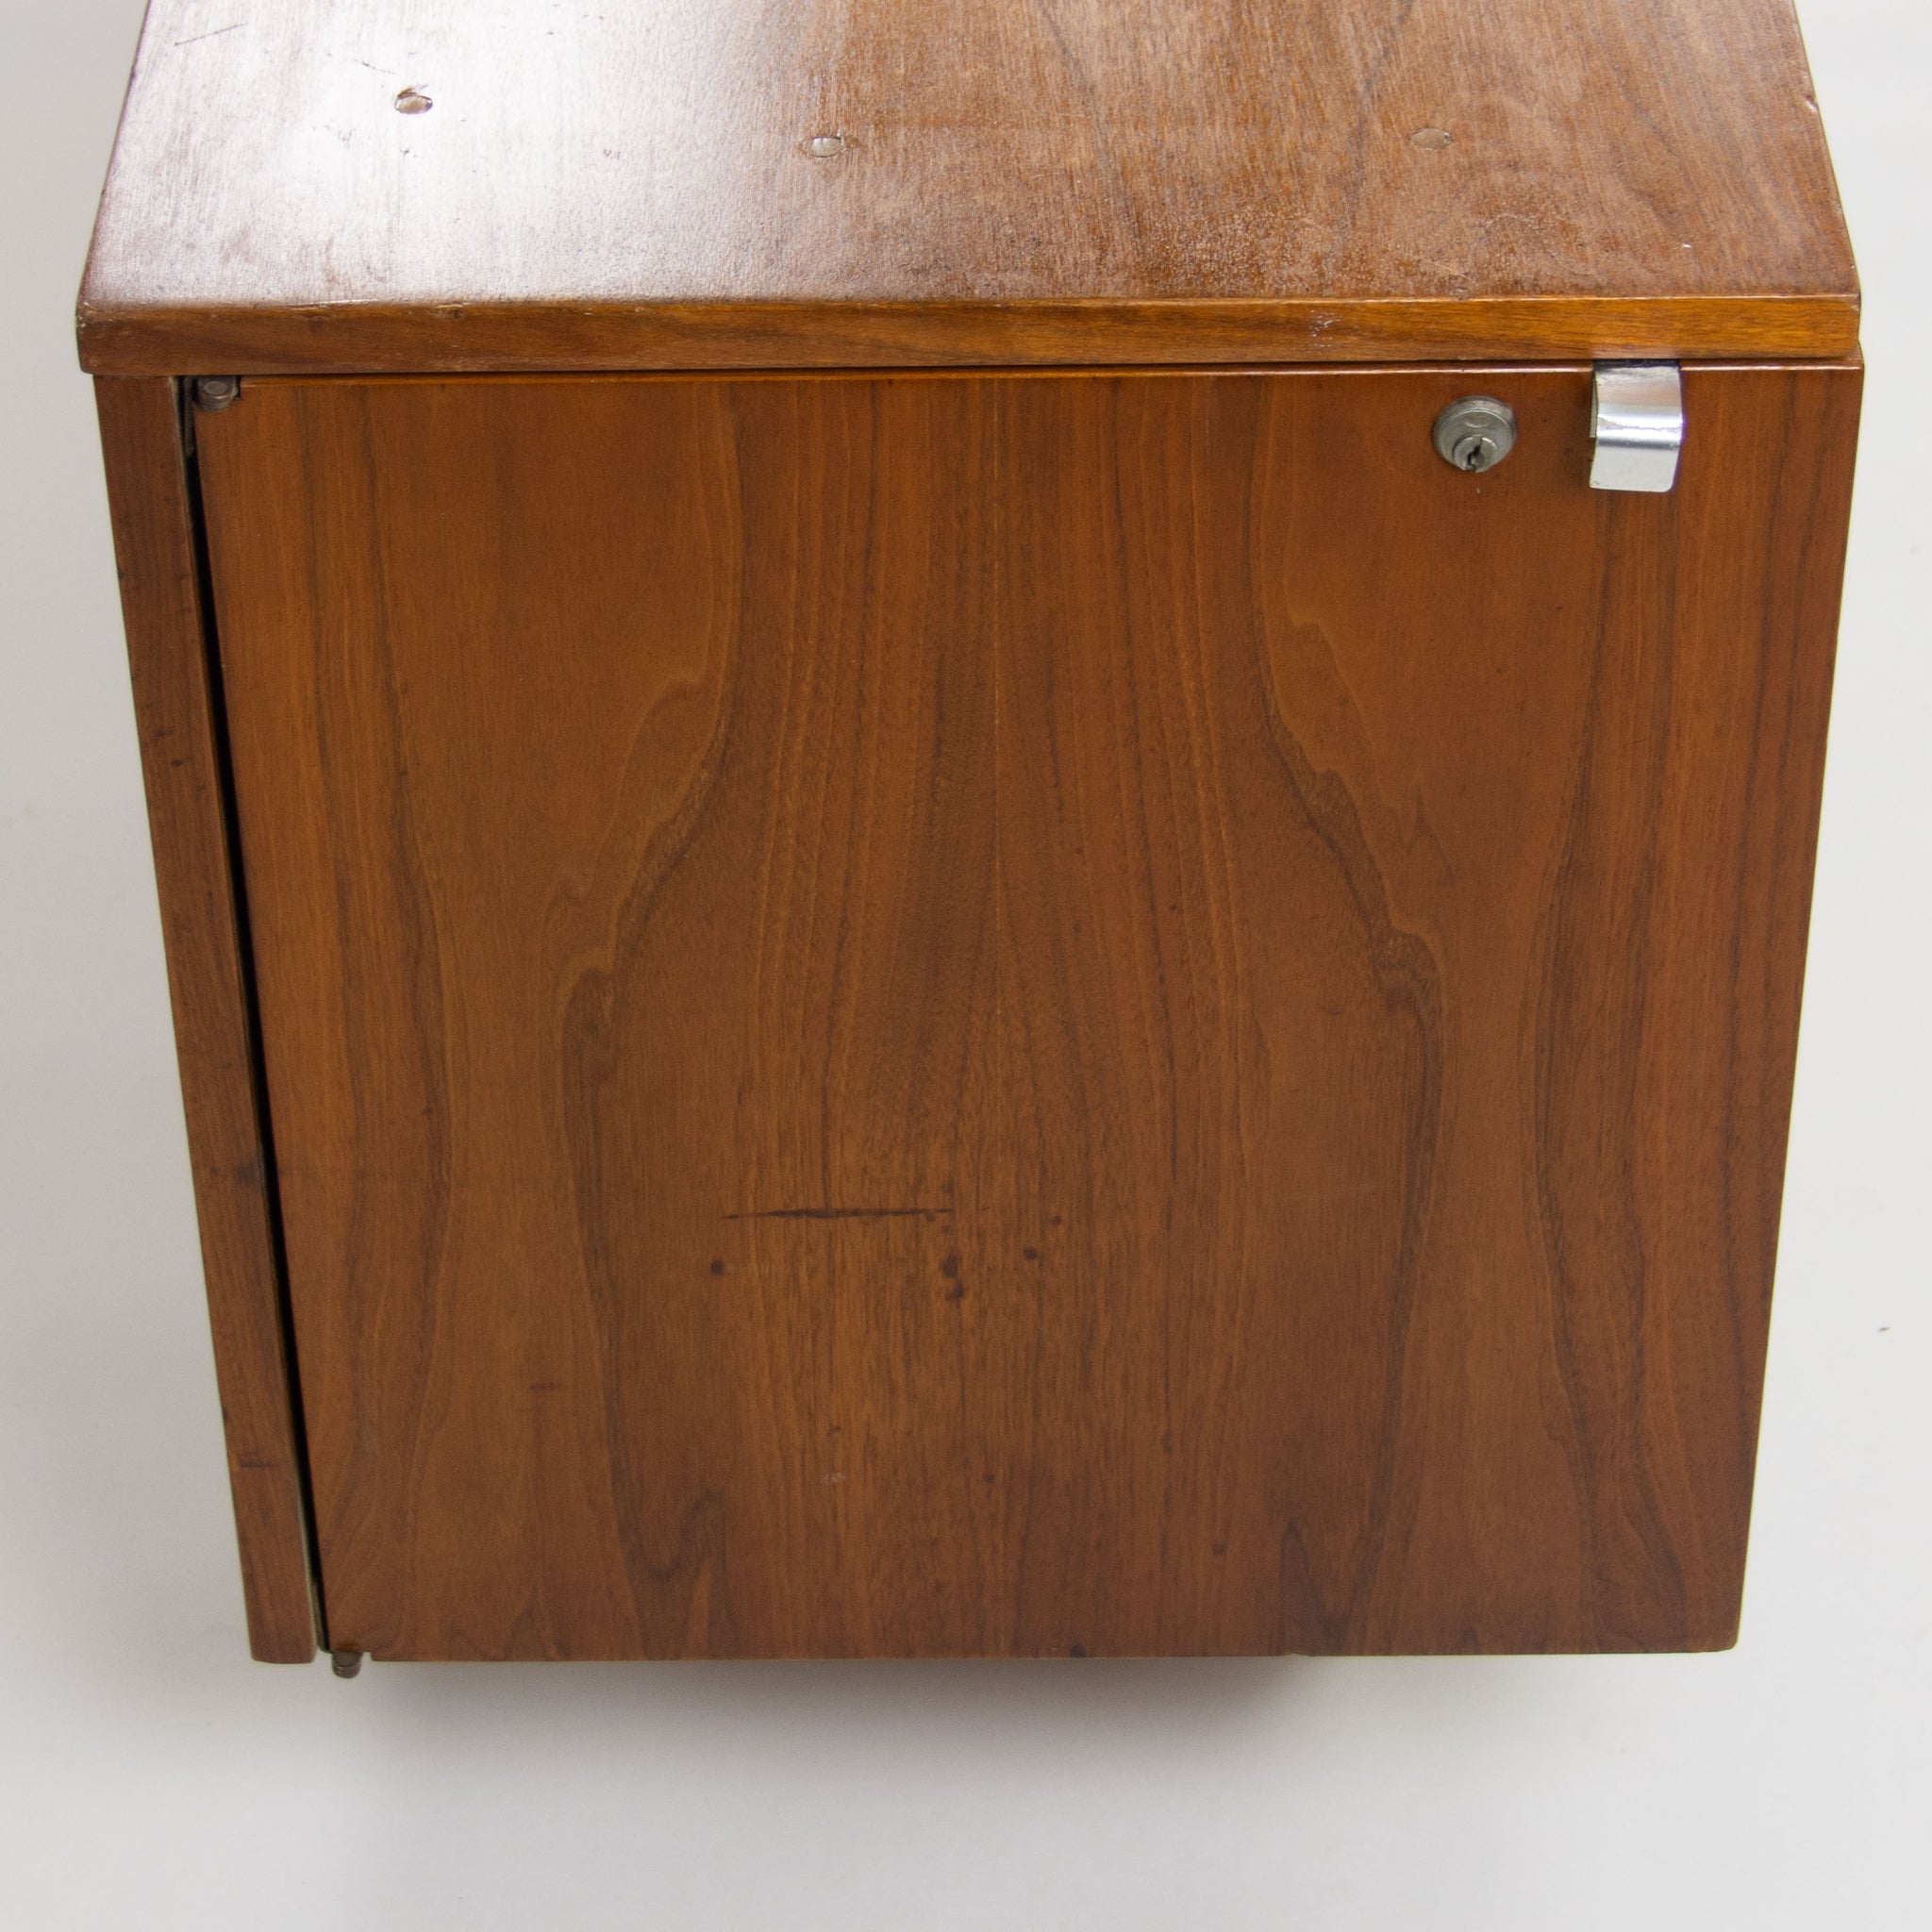 SOLD 1950's George Nelson Herman Miller Rare Walnut Credenza Cabinet Sideboard